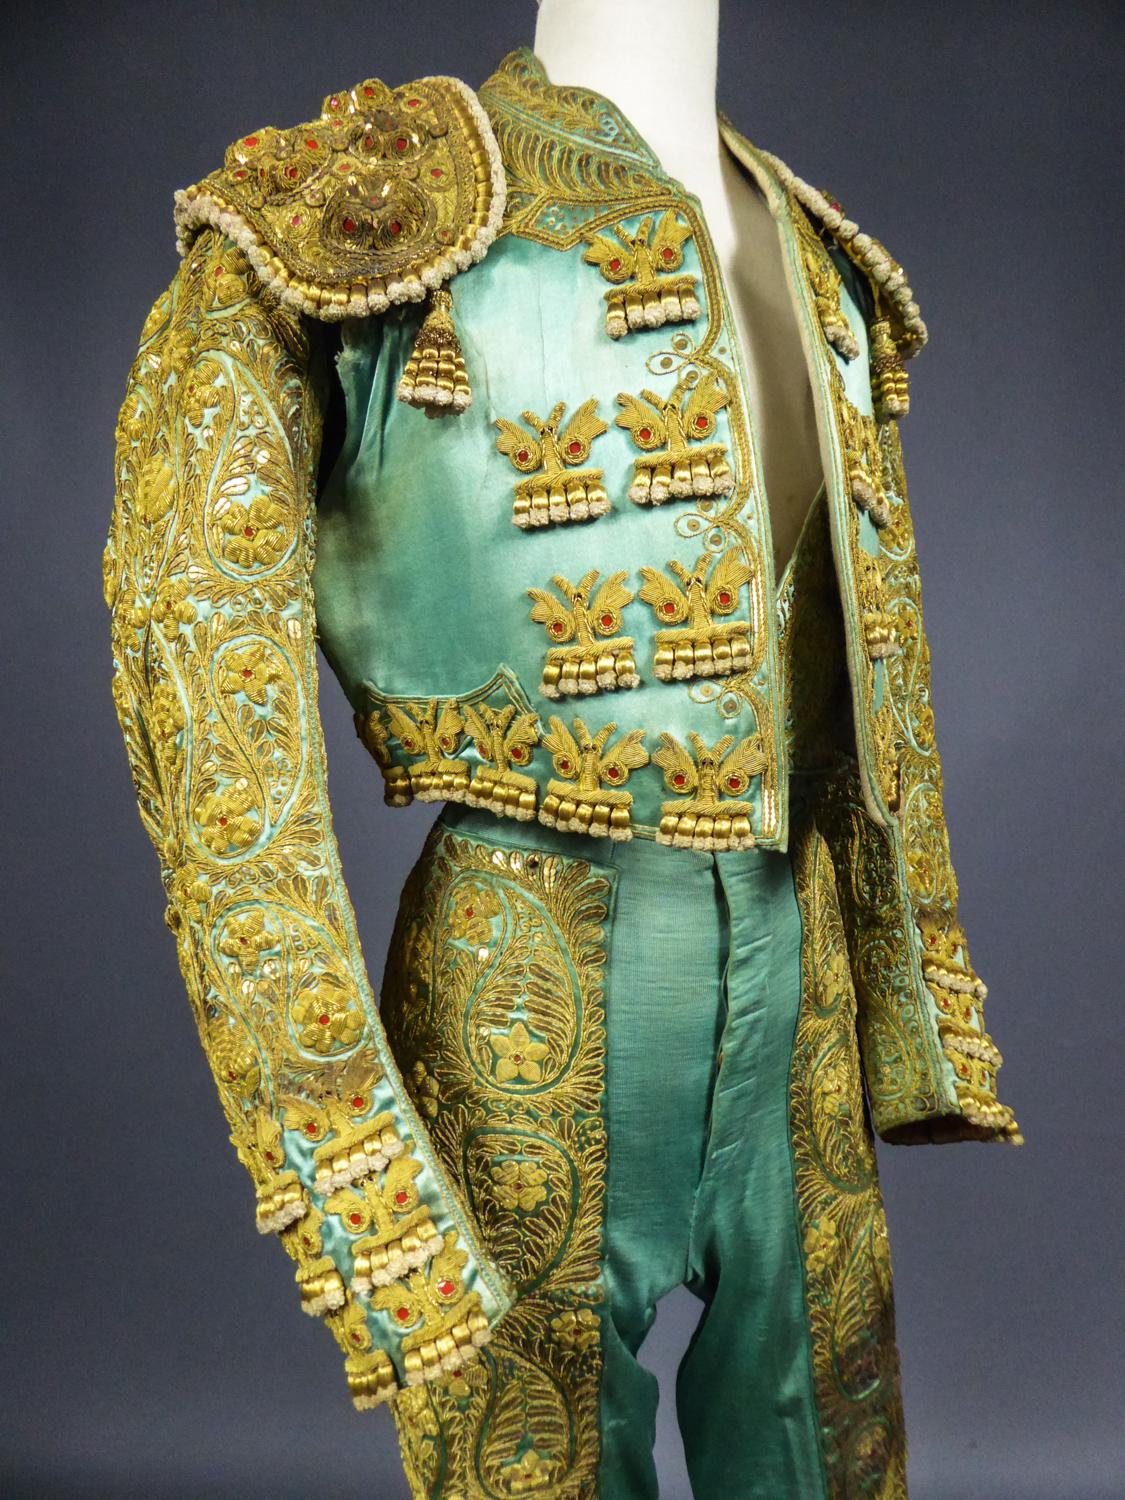 Bullfighter's Outfit Toreador Labelled Manfredi Sevilla 20th Century 2